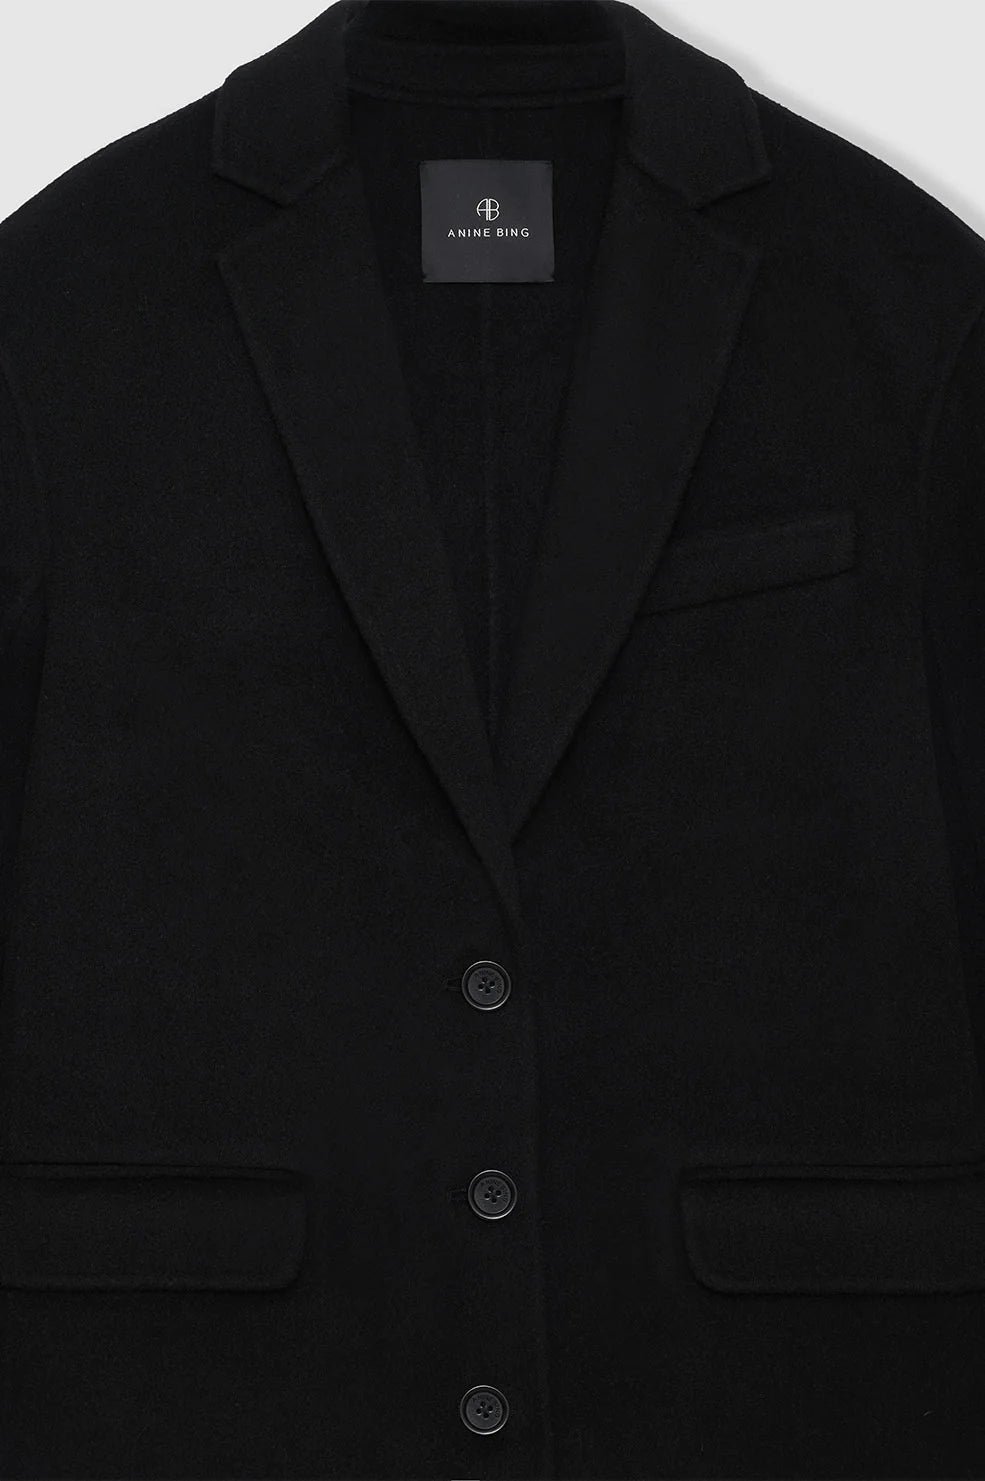 Anine Bing Quinn Coat - Black Cashmere Blend